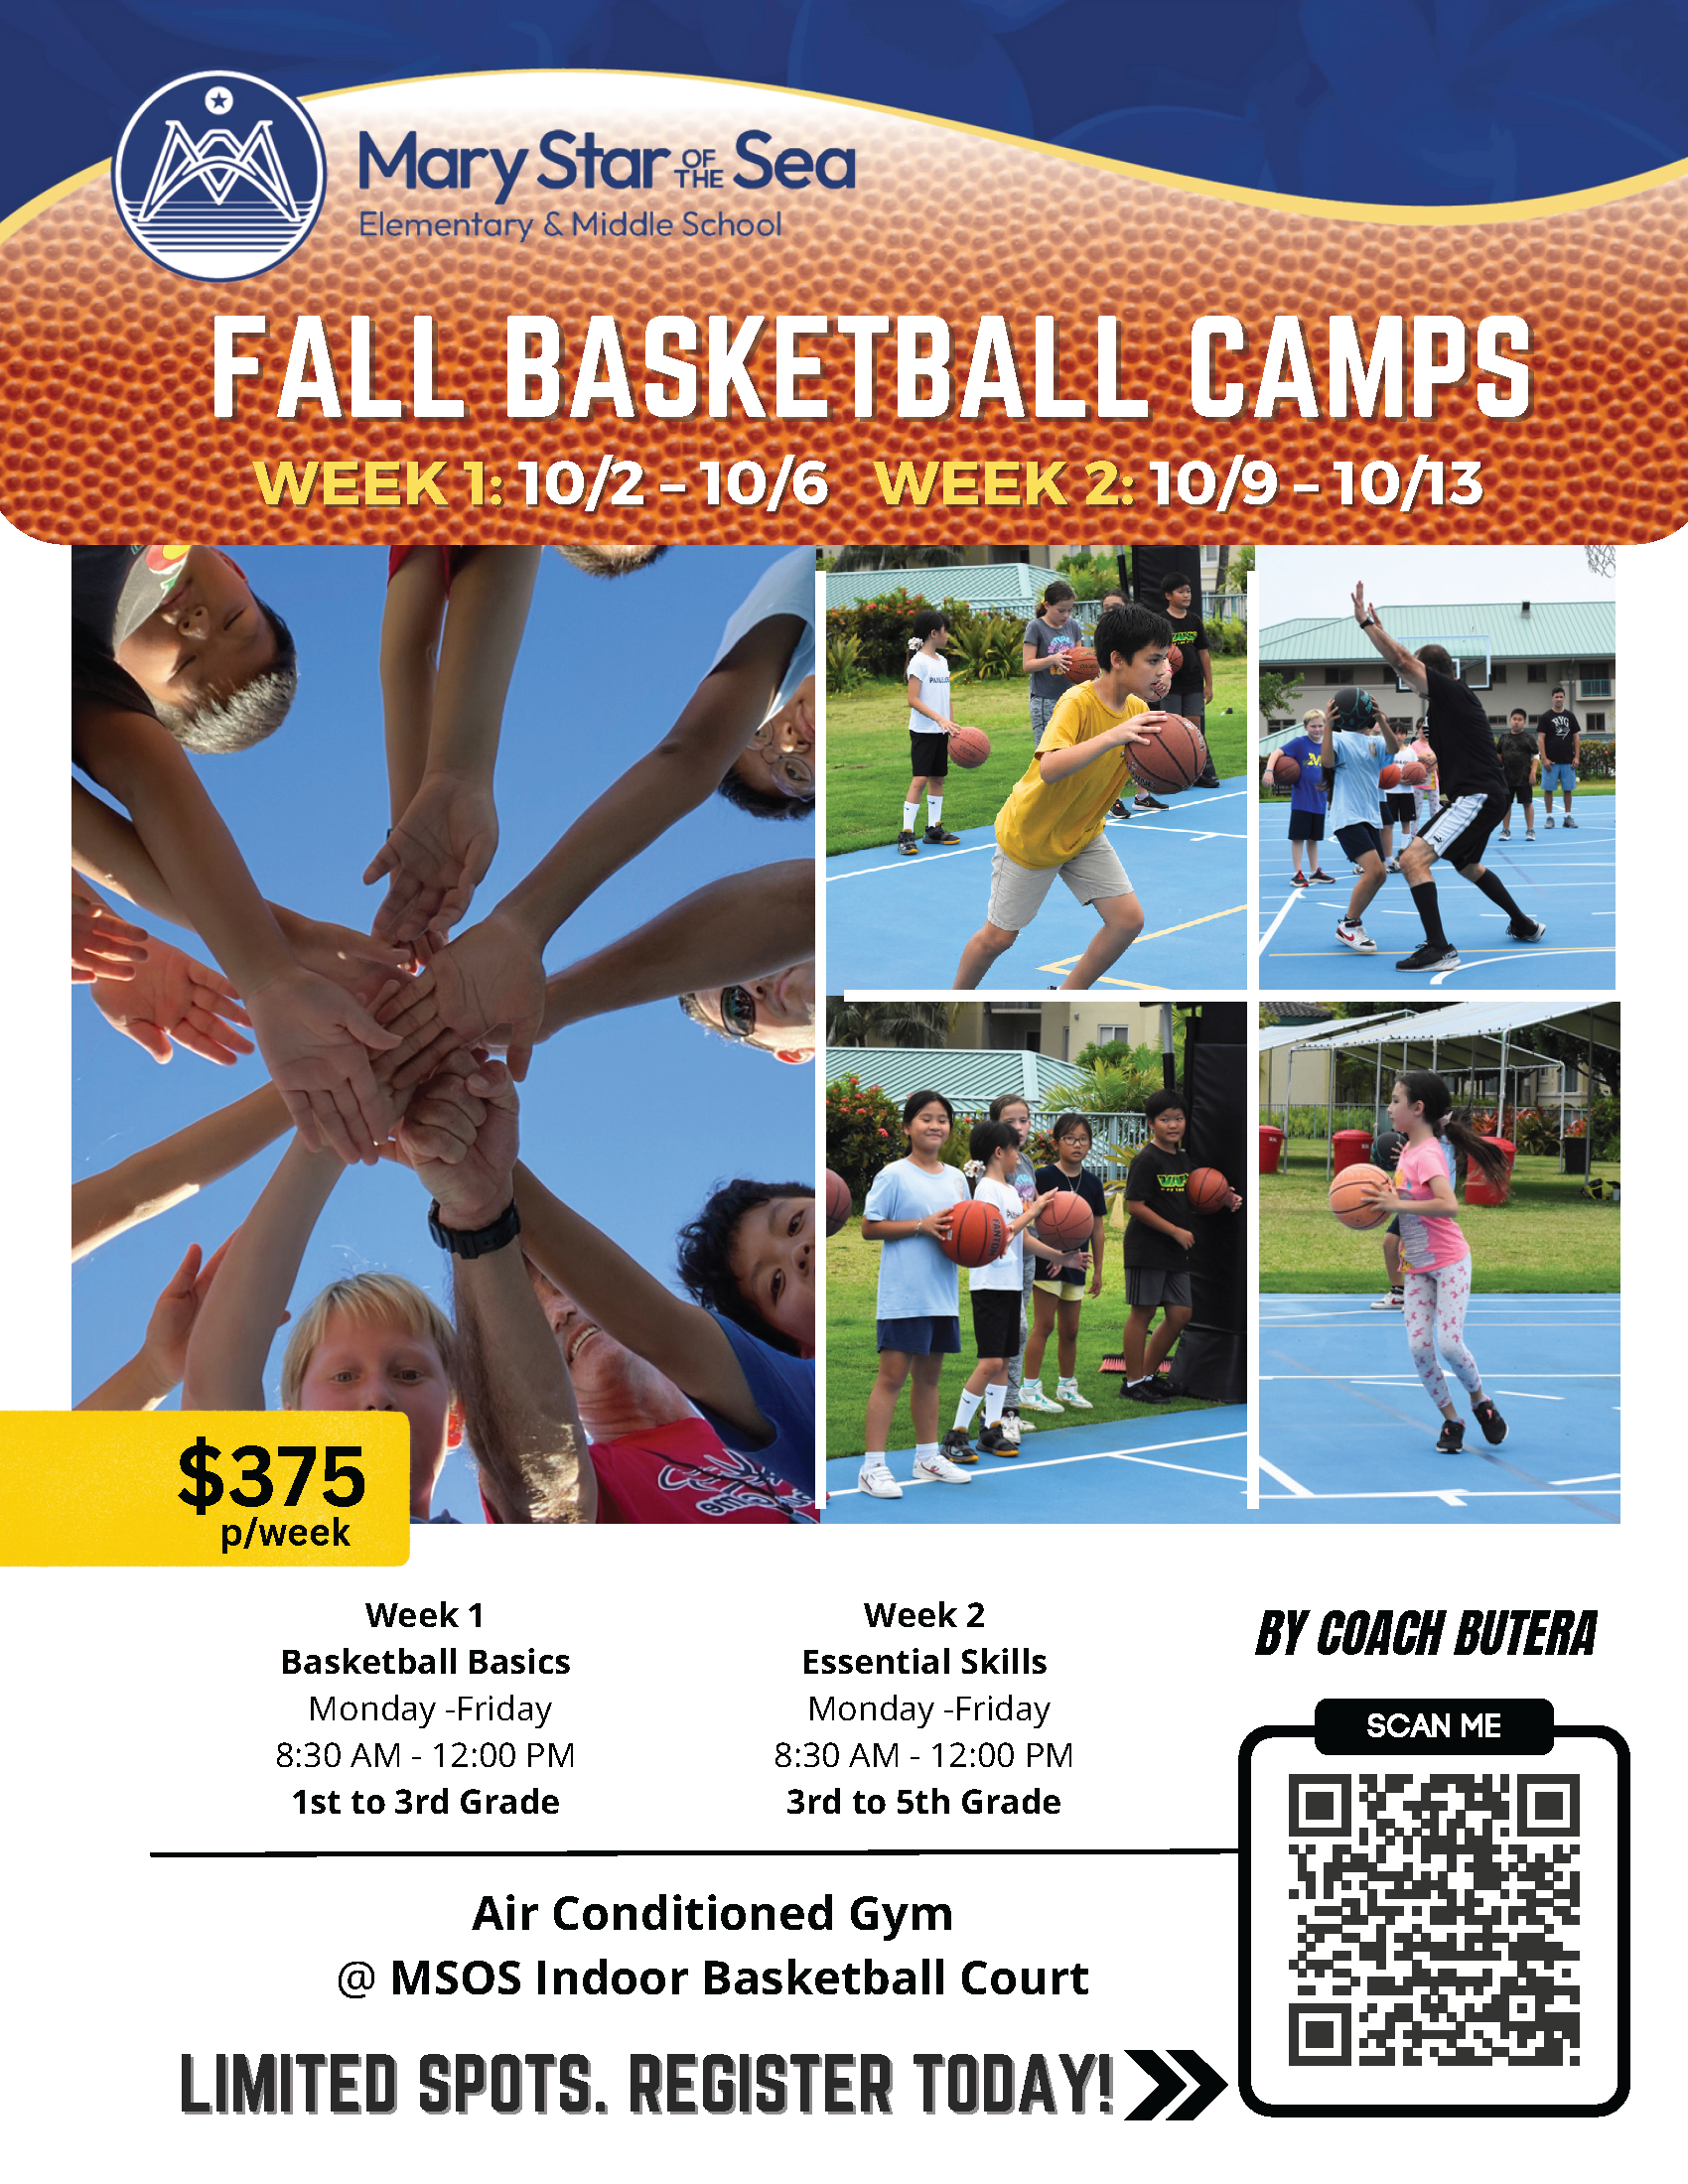 Summer Basketball Camps Near You, 1 & 2 Week Sleepaway Camps